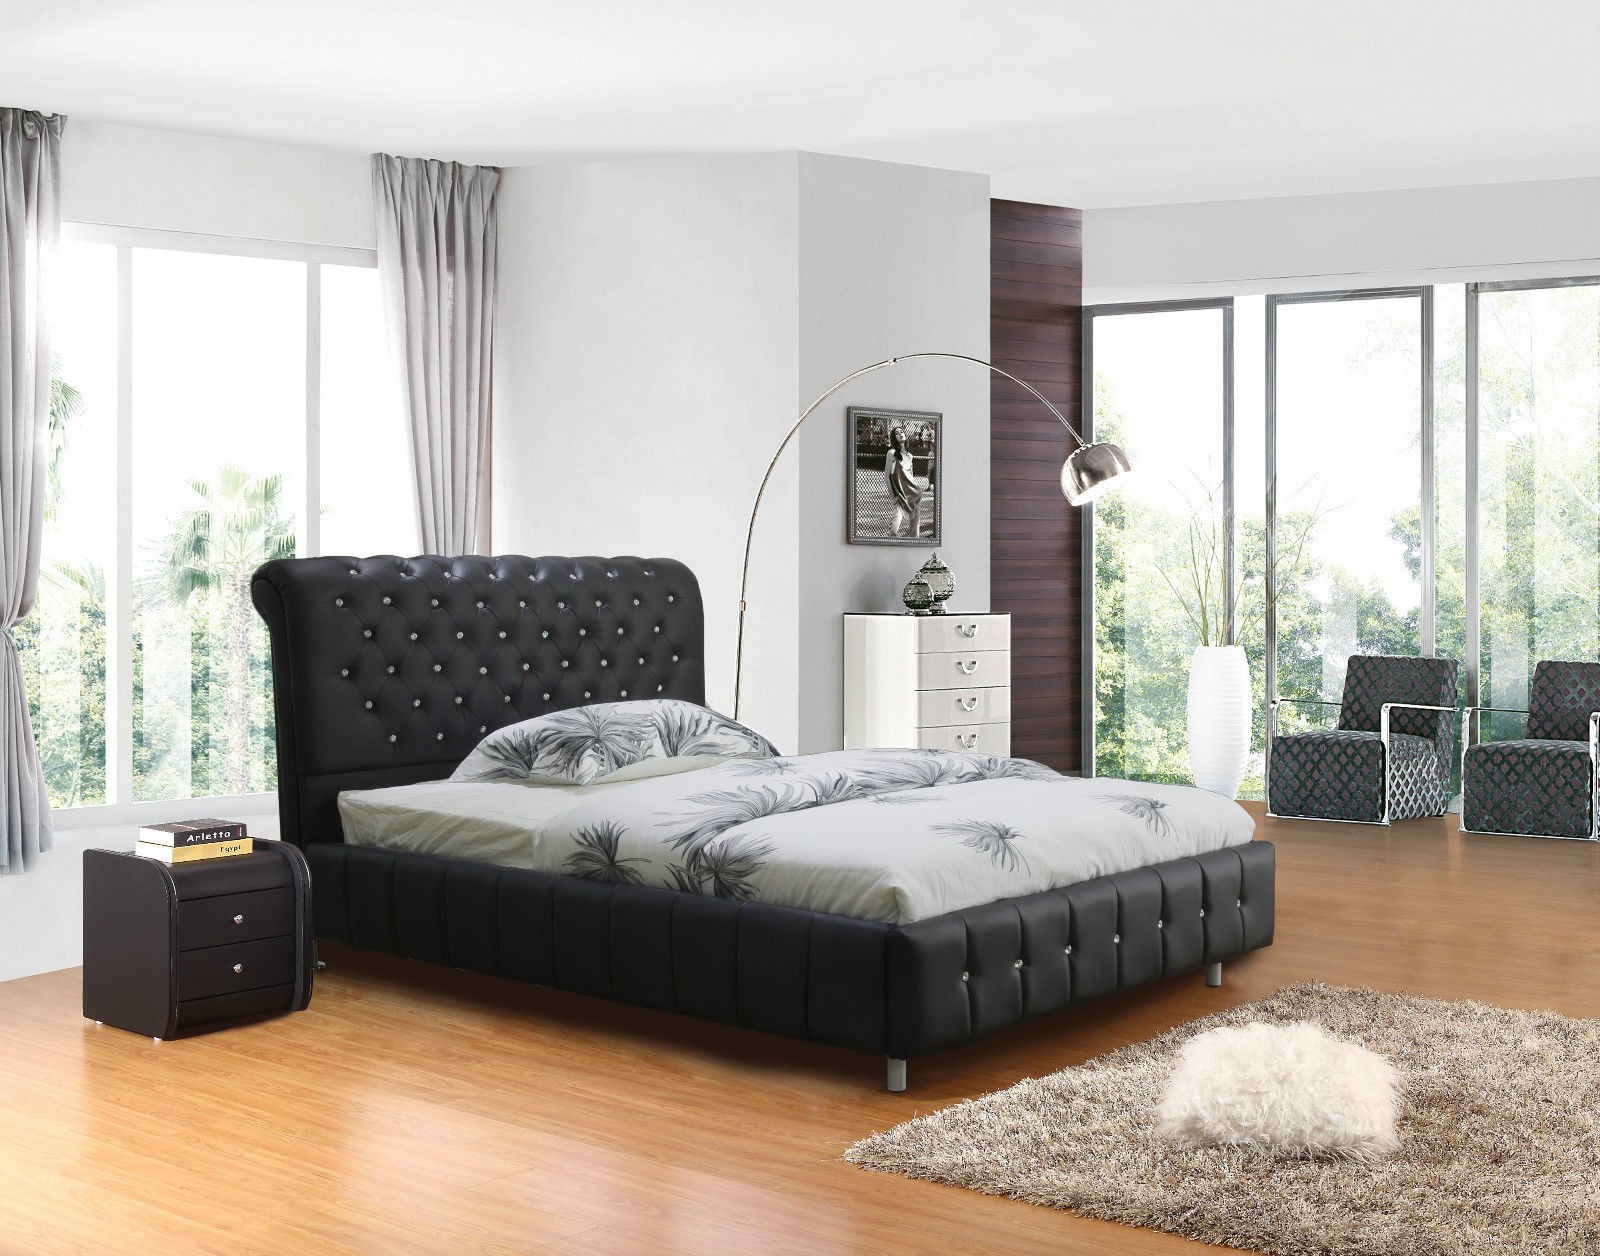 Avalon Pu Leather Bed King Size Black, Black Leather King Size Bed Frame